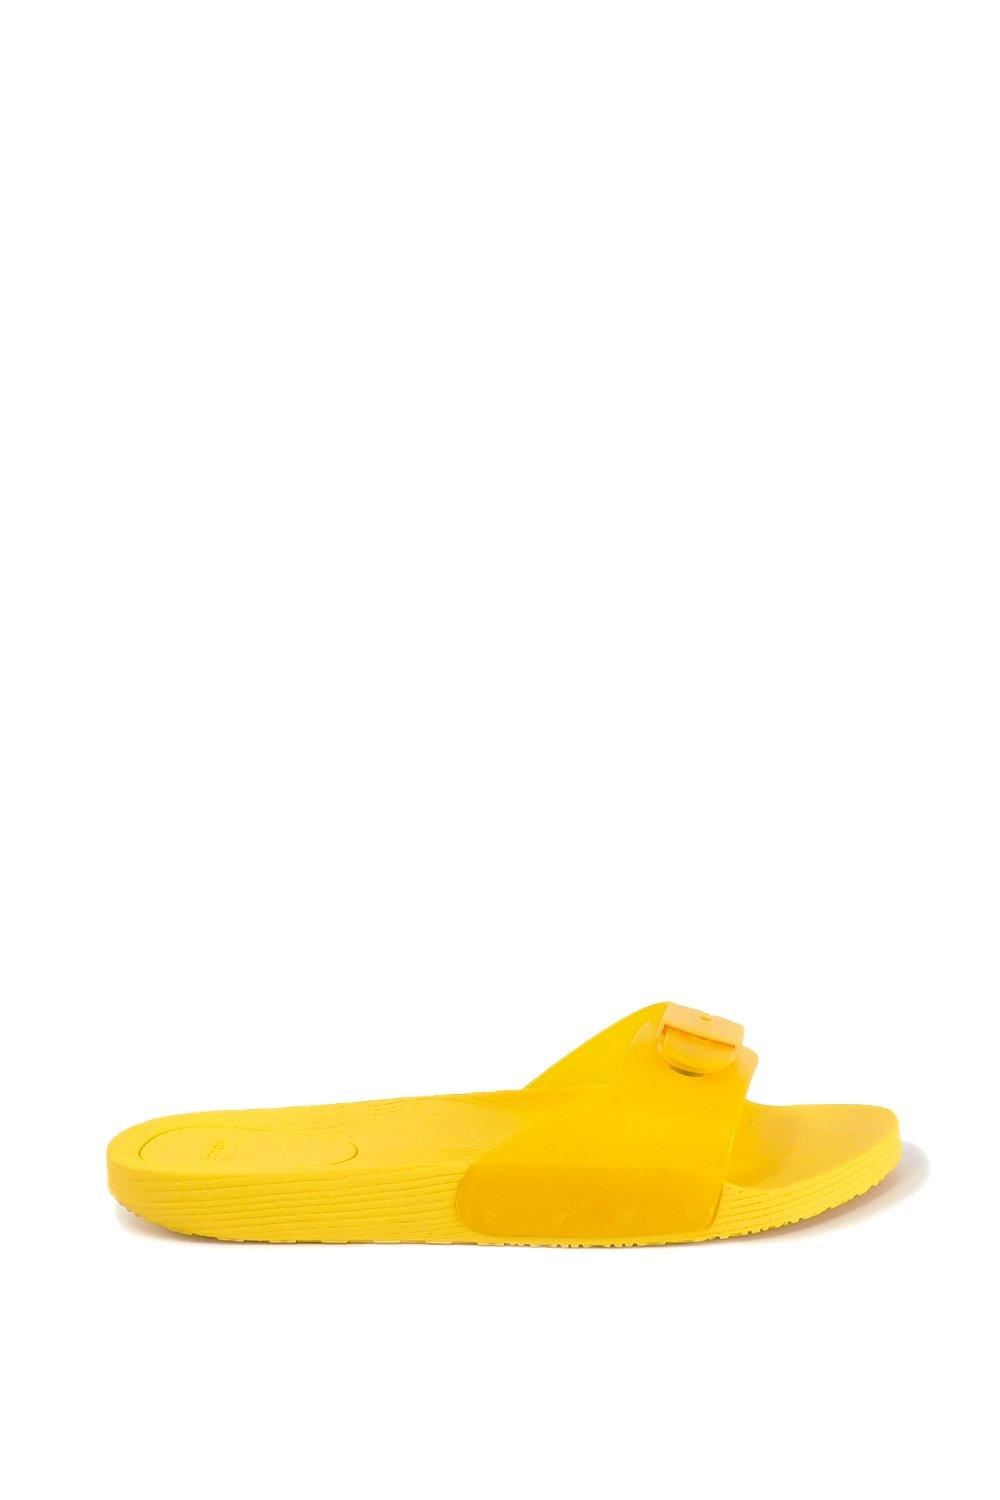 'Scholl Pop' Sandal Slide